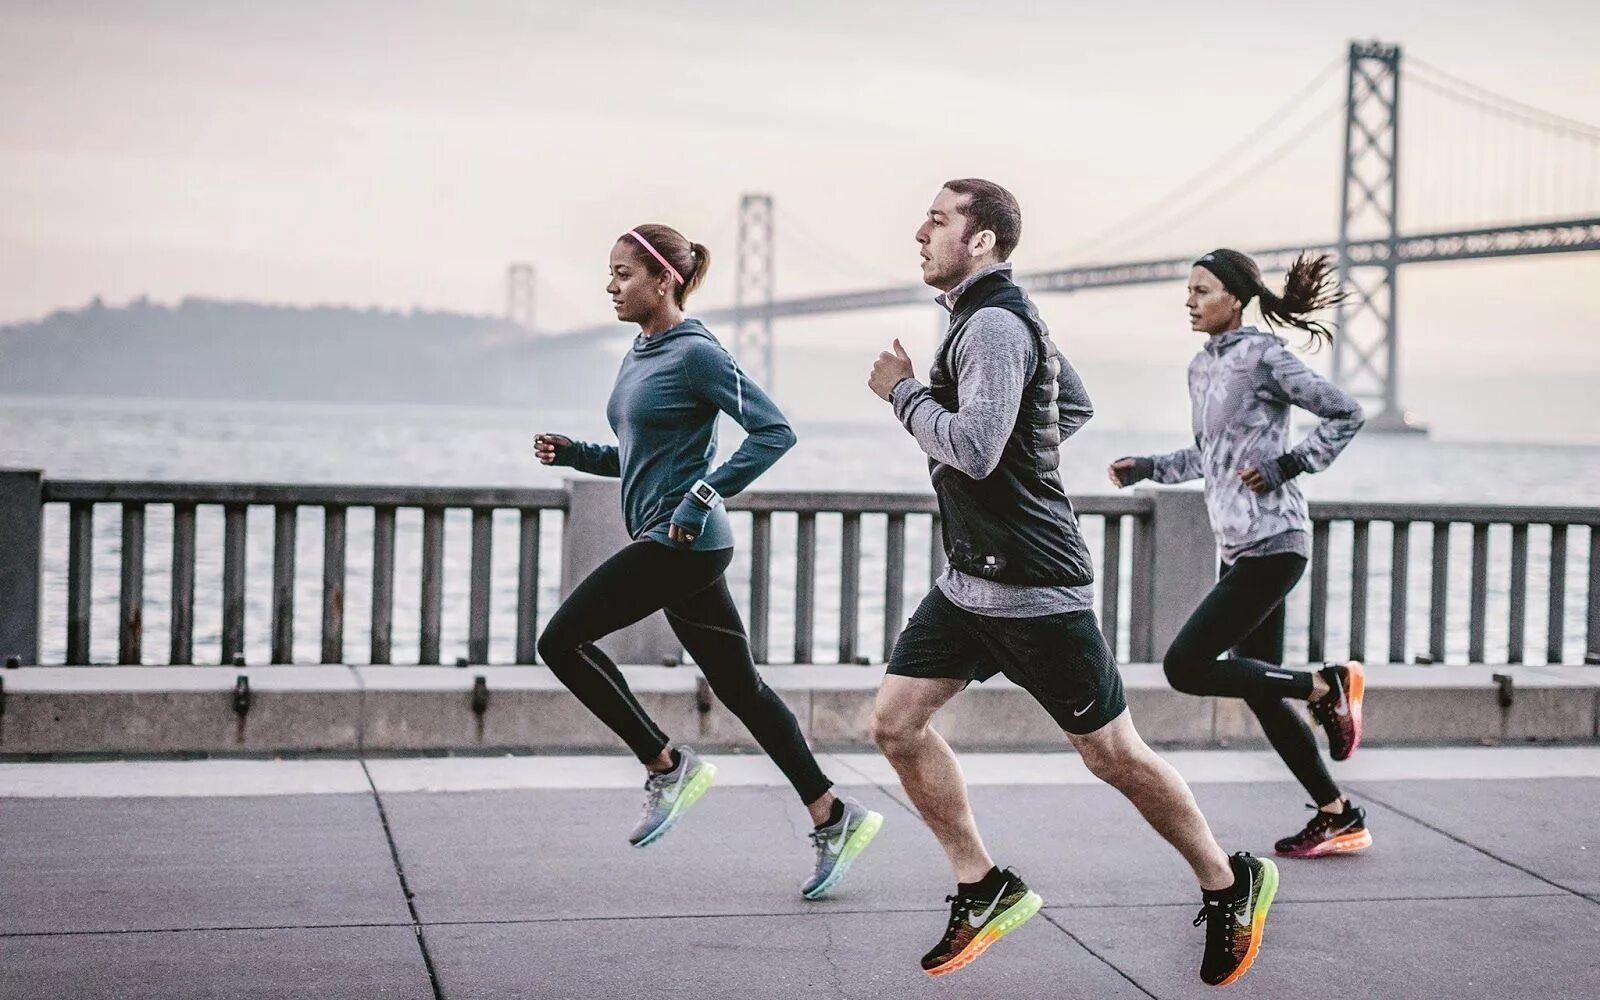 Running offline. Nike Running. Nike Running бег. Занятие спортом. Фотосессия в спортивном стиле.